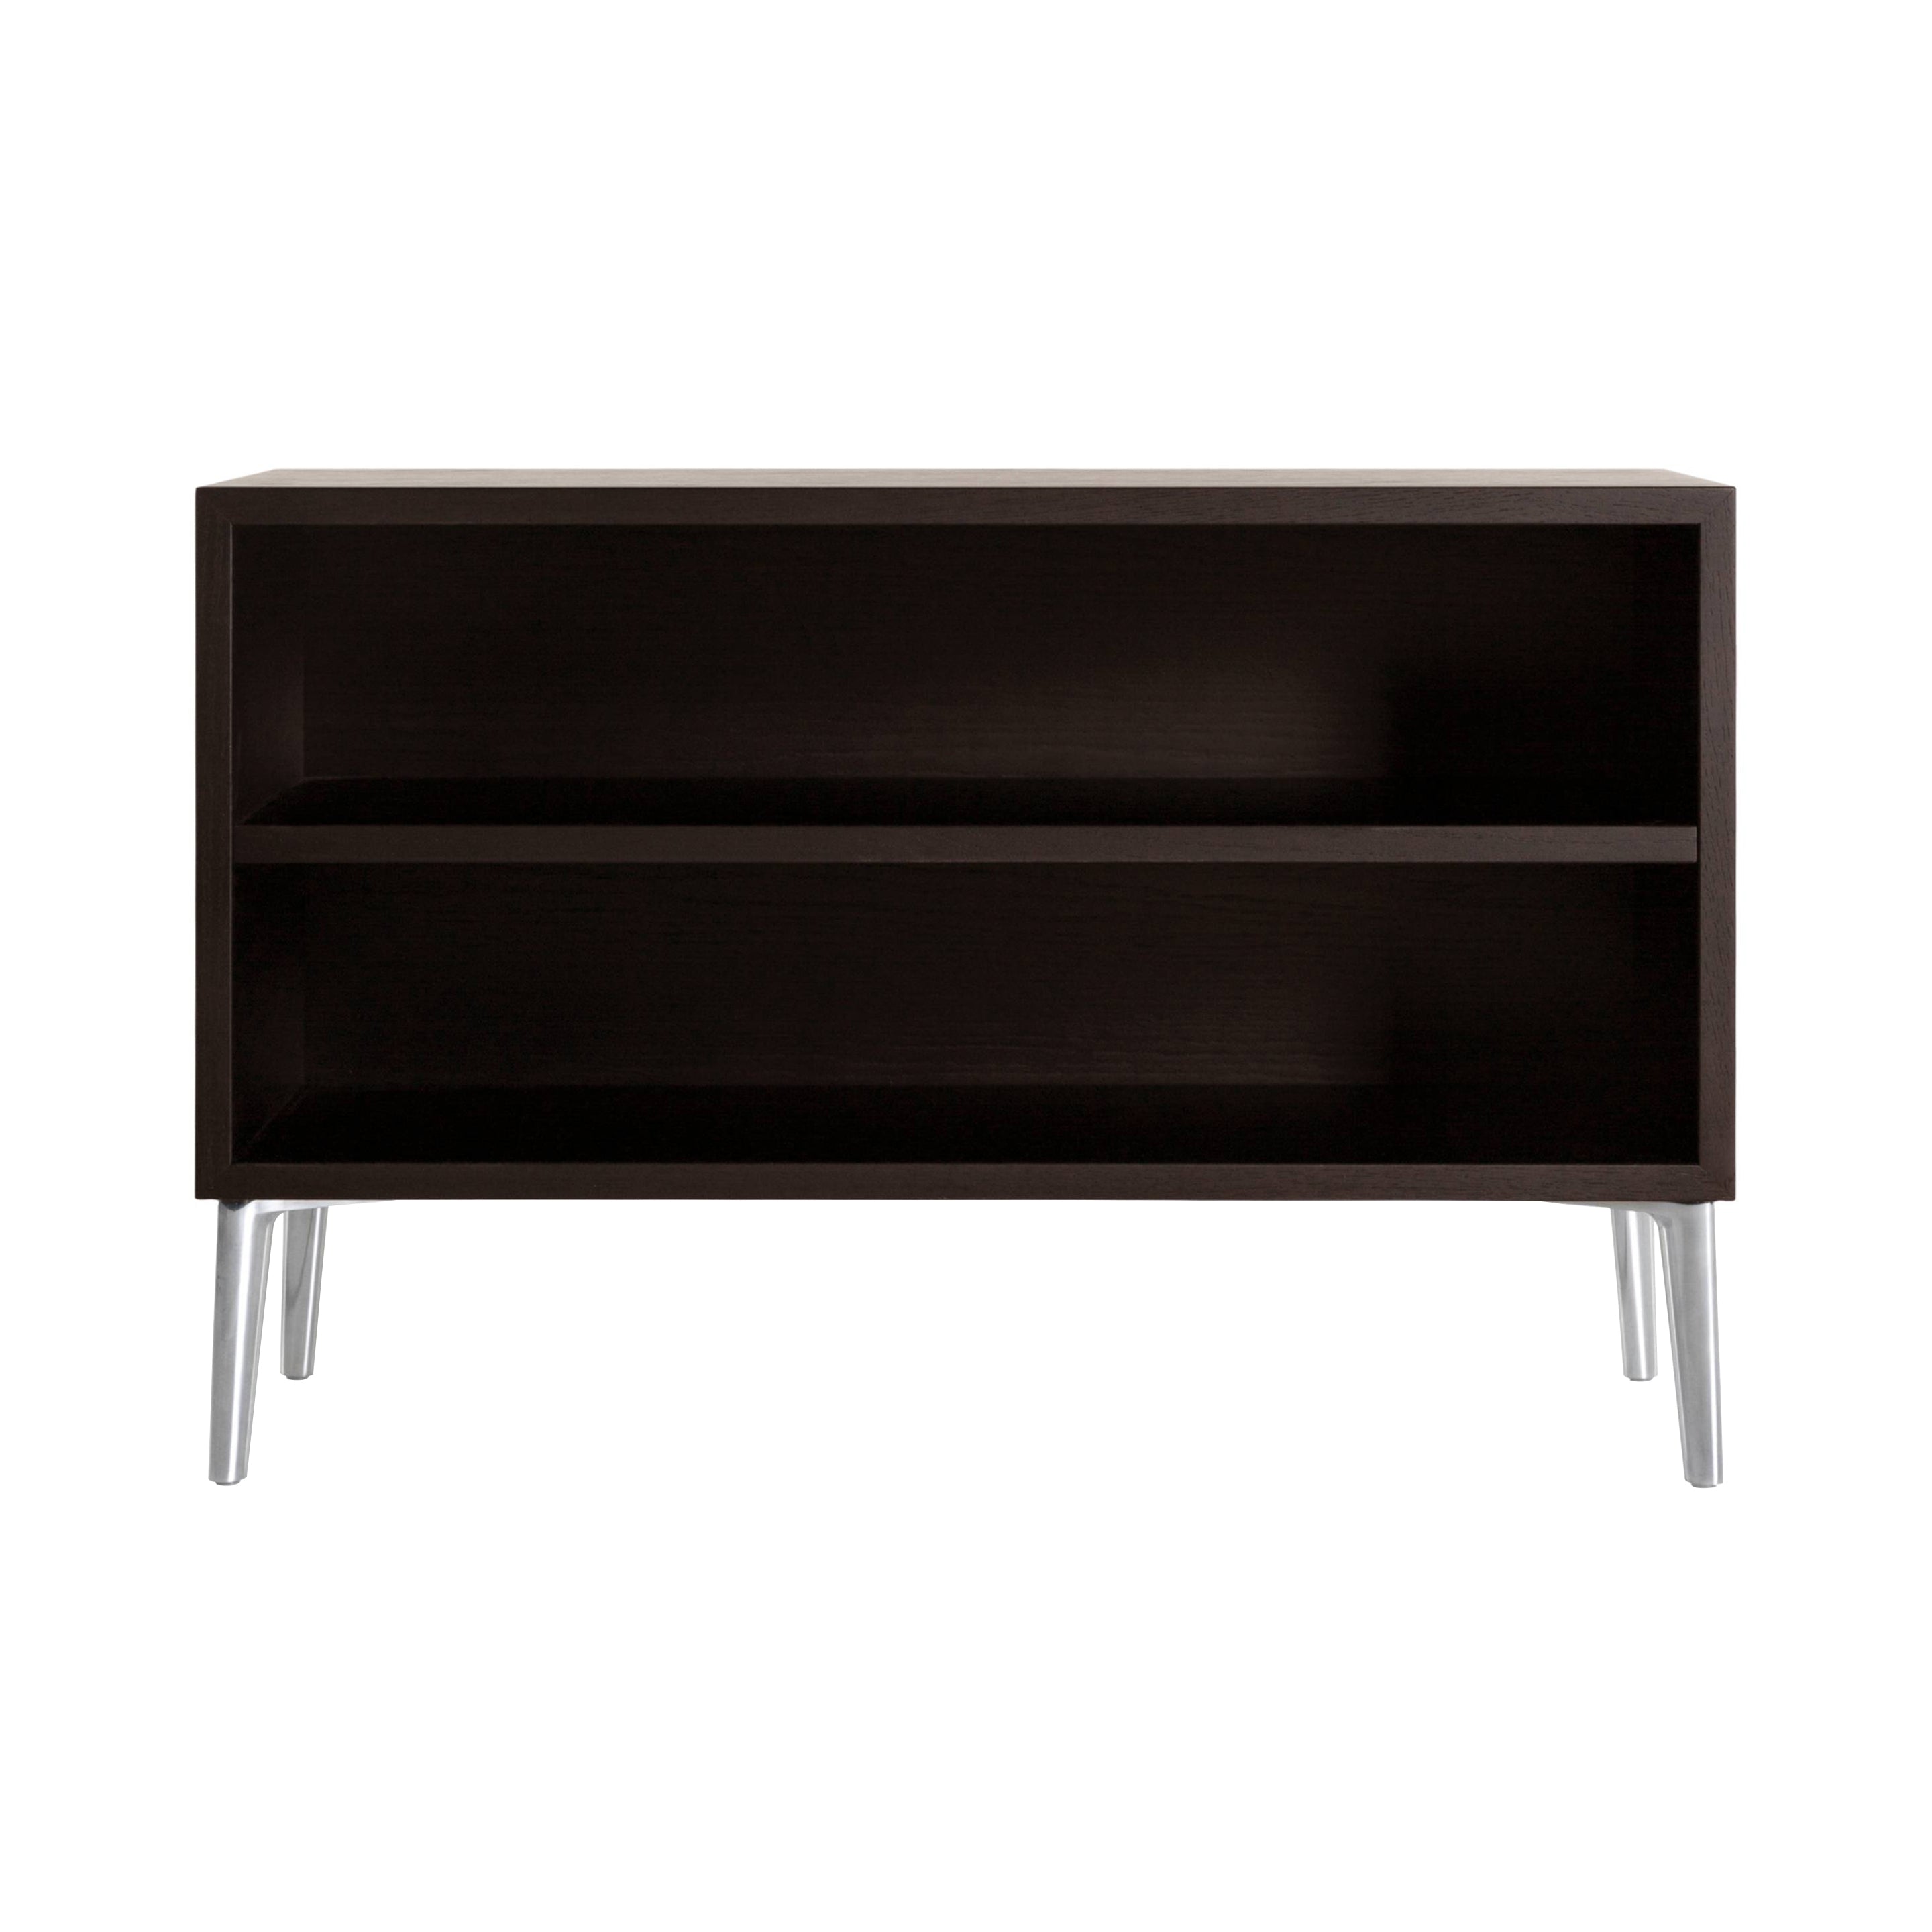 Sofa So Good Demi Double Shelf: Grey